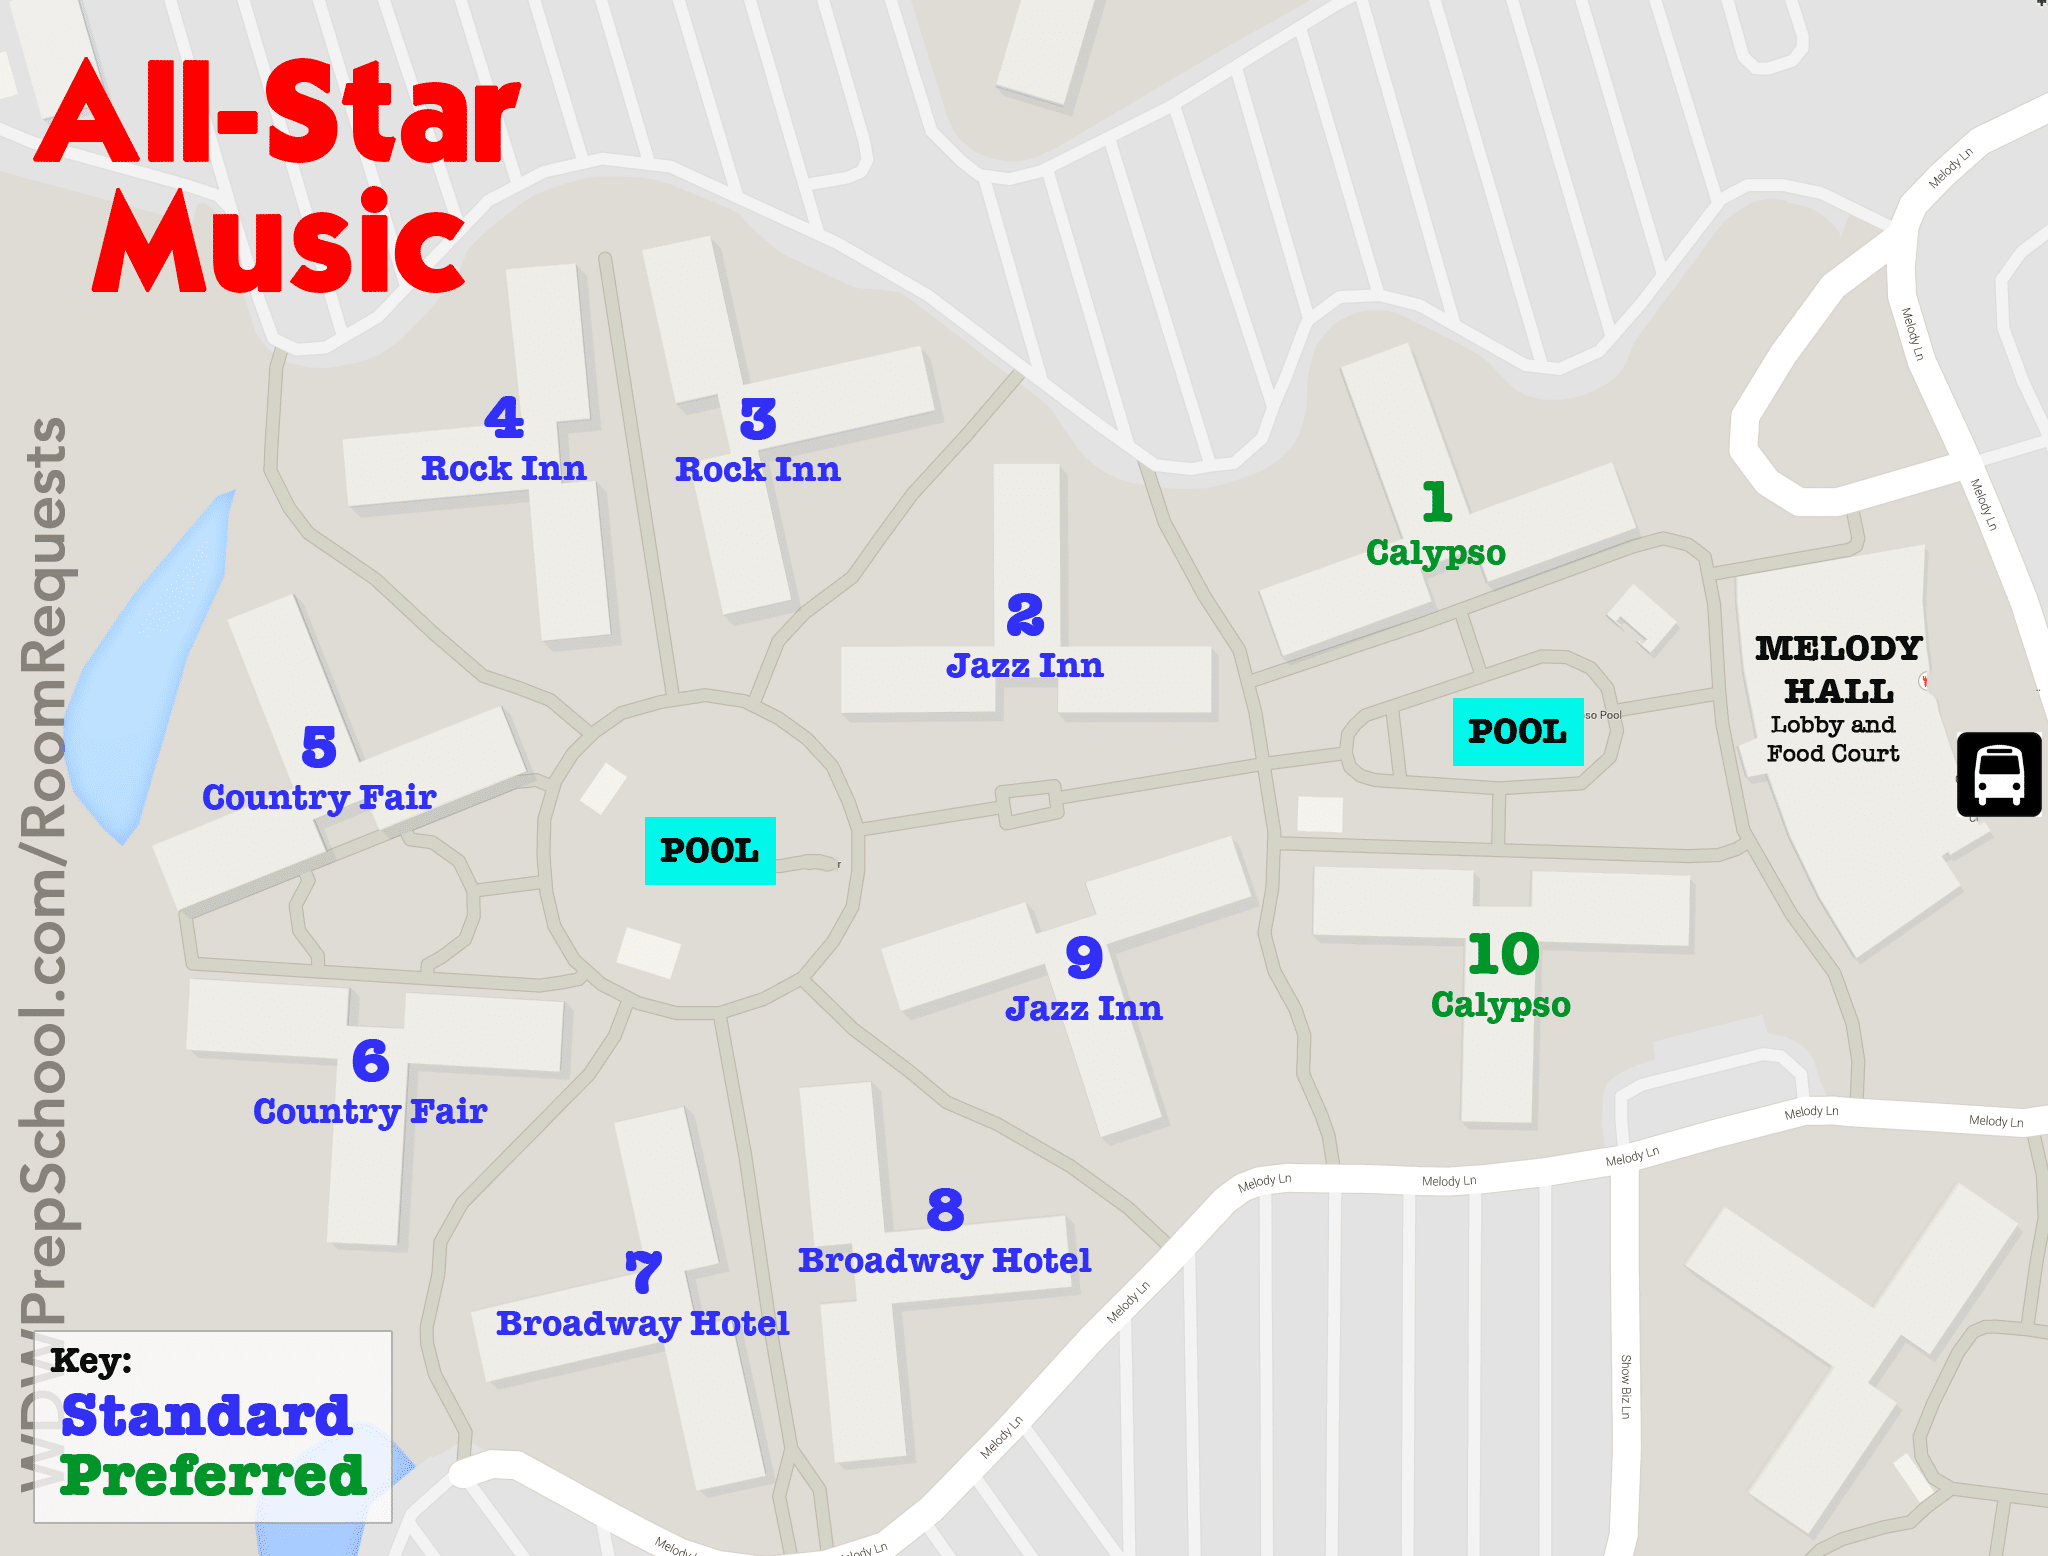 All-Star Music Resort Maps